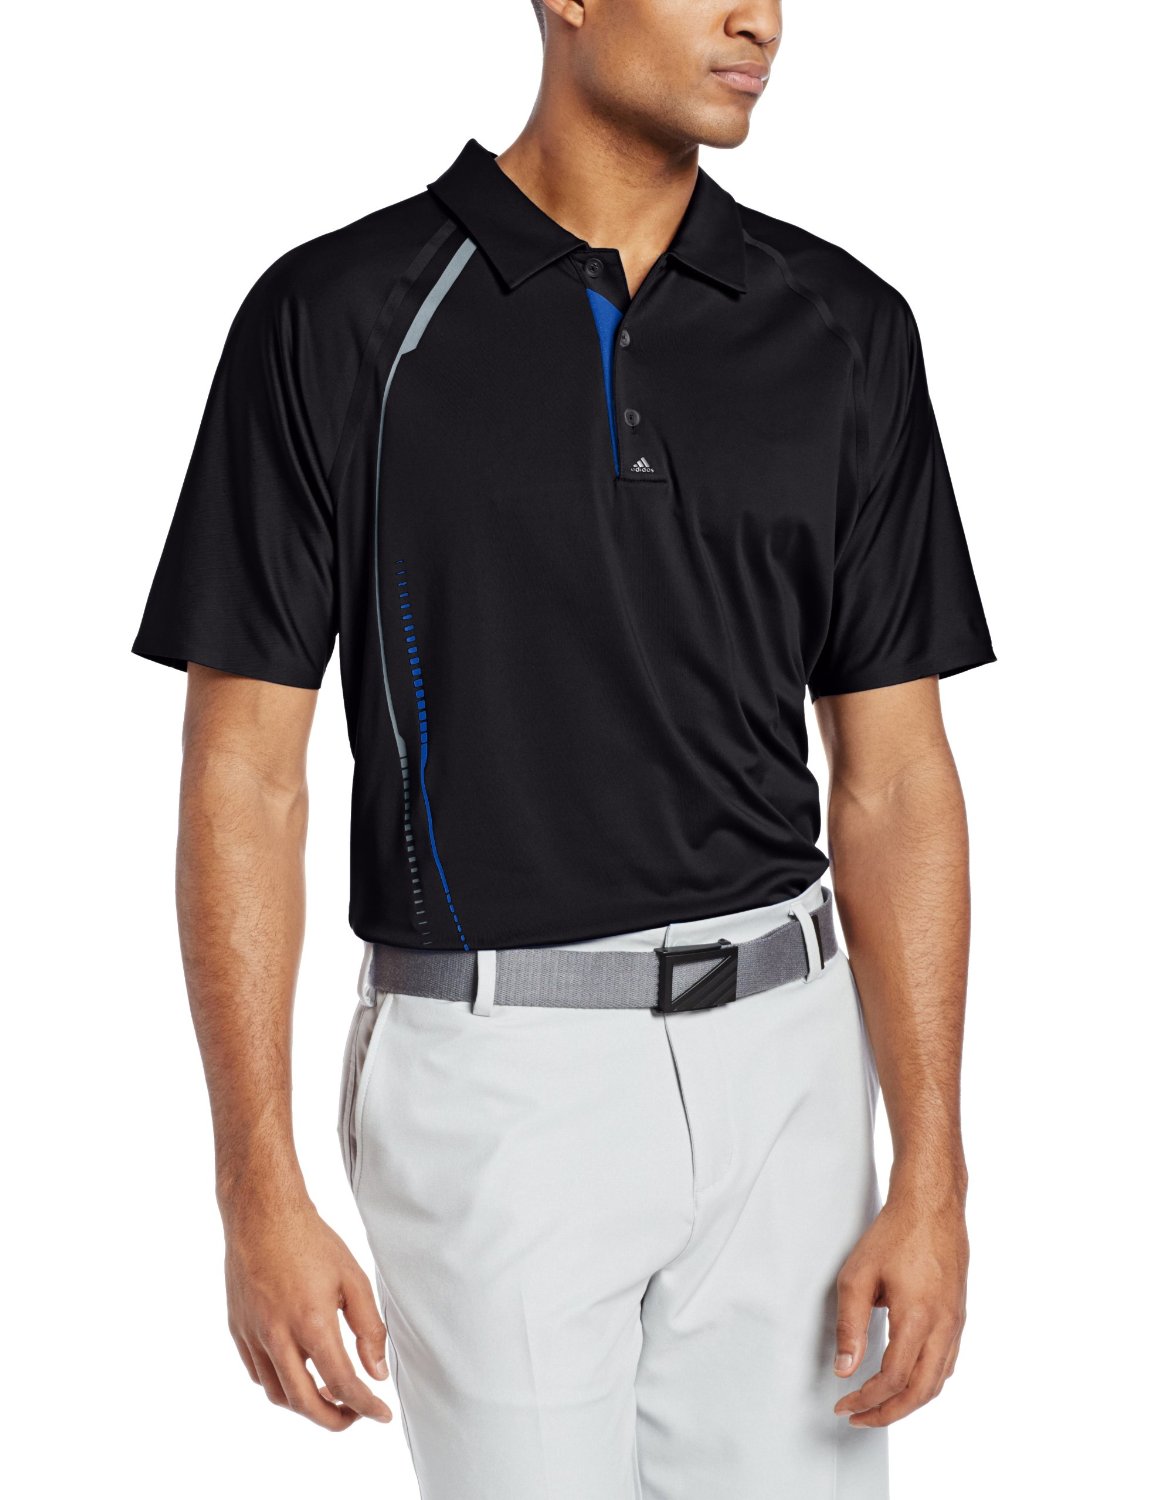 Adidas Mens Puremotion Tour Climacool Graphic Print Golf Polo Shirts